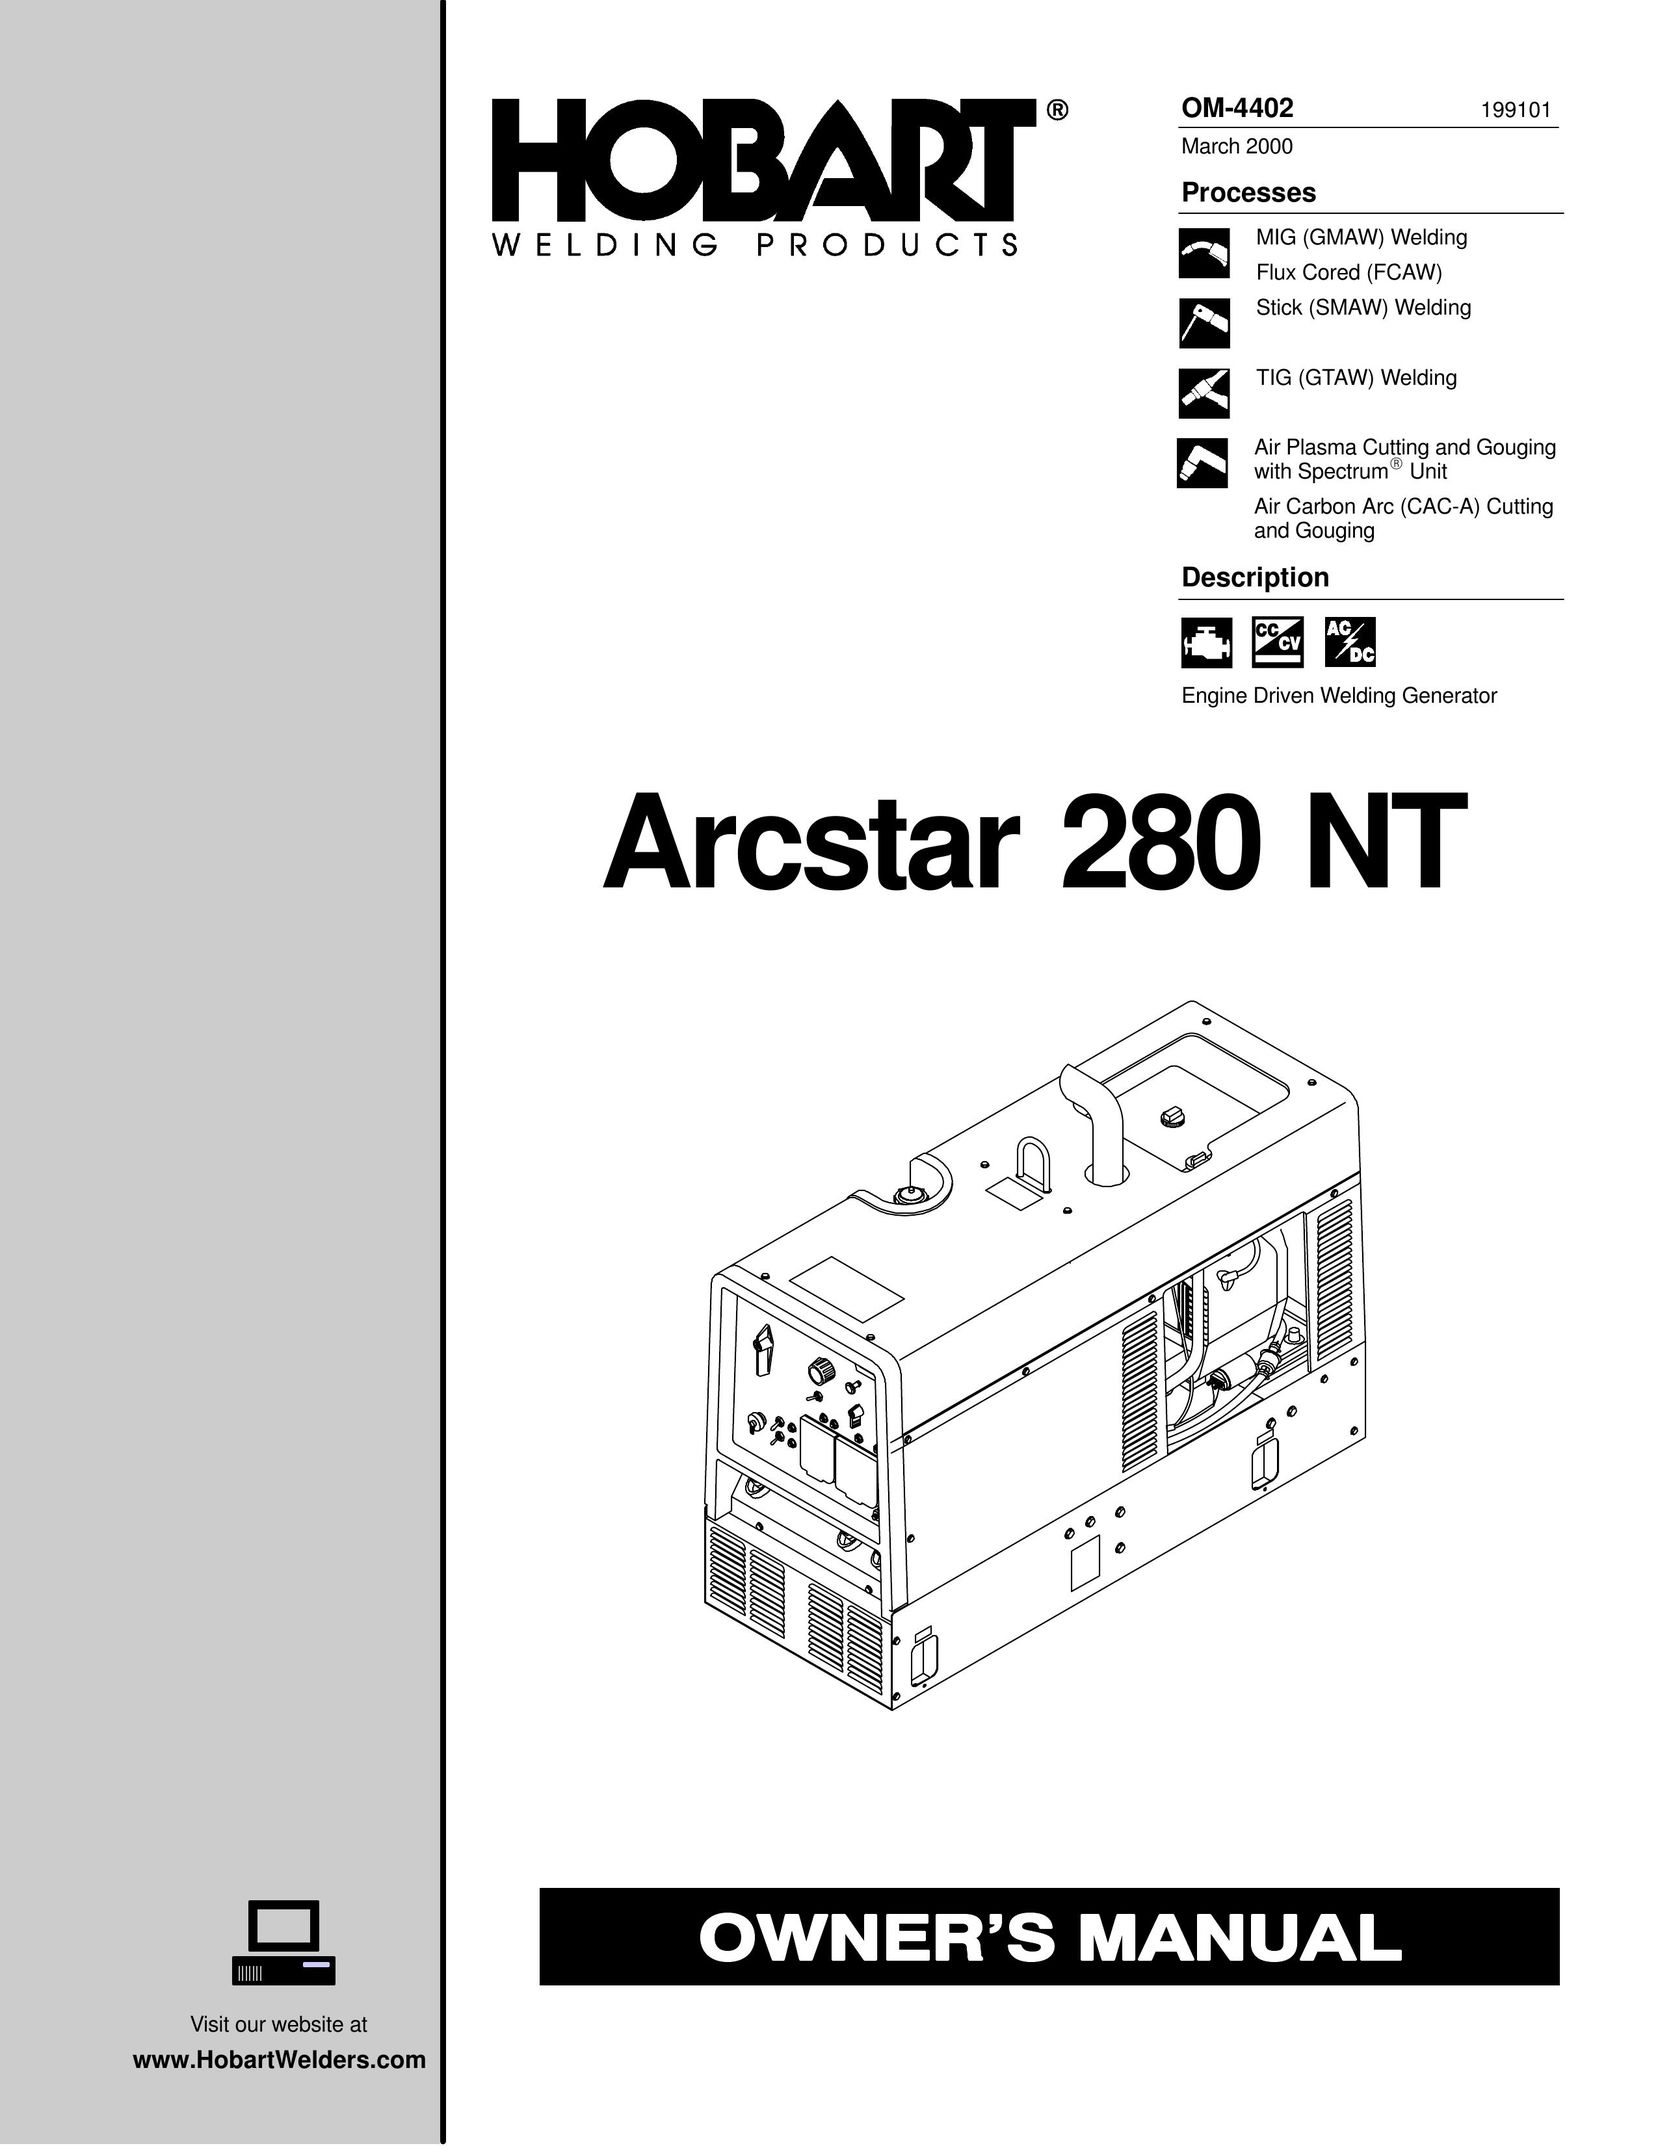 Hobart Welding Products 280 NT Welder User Manual